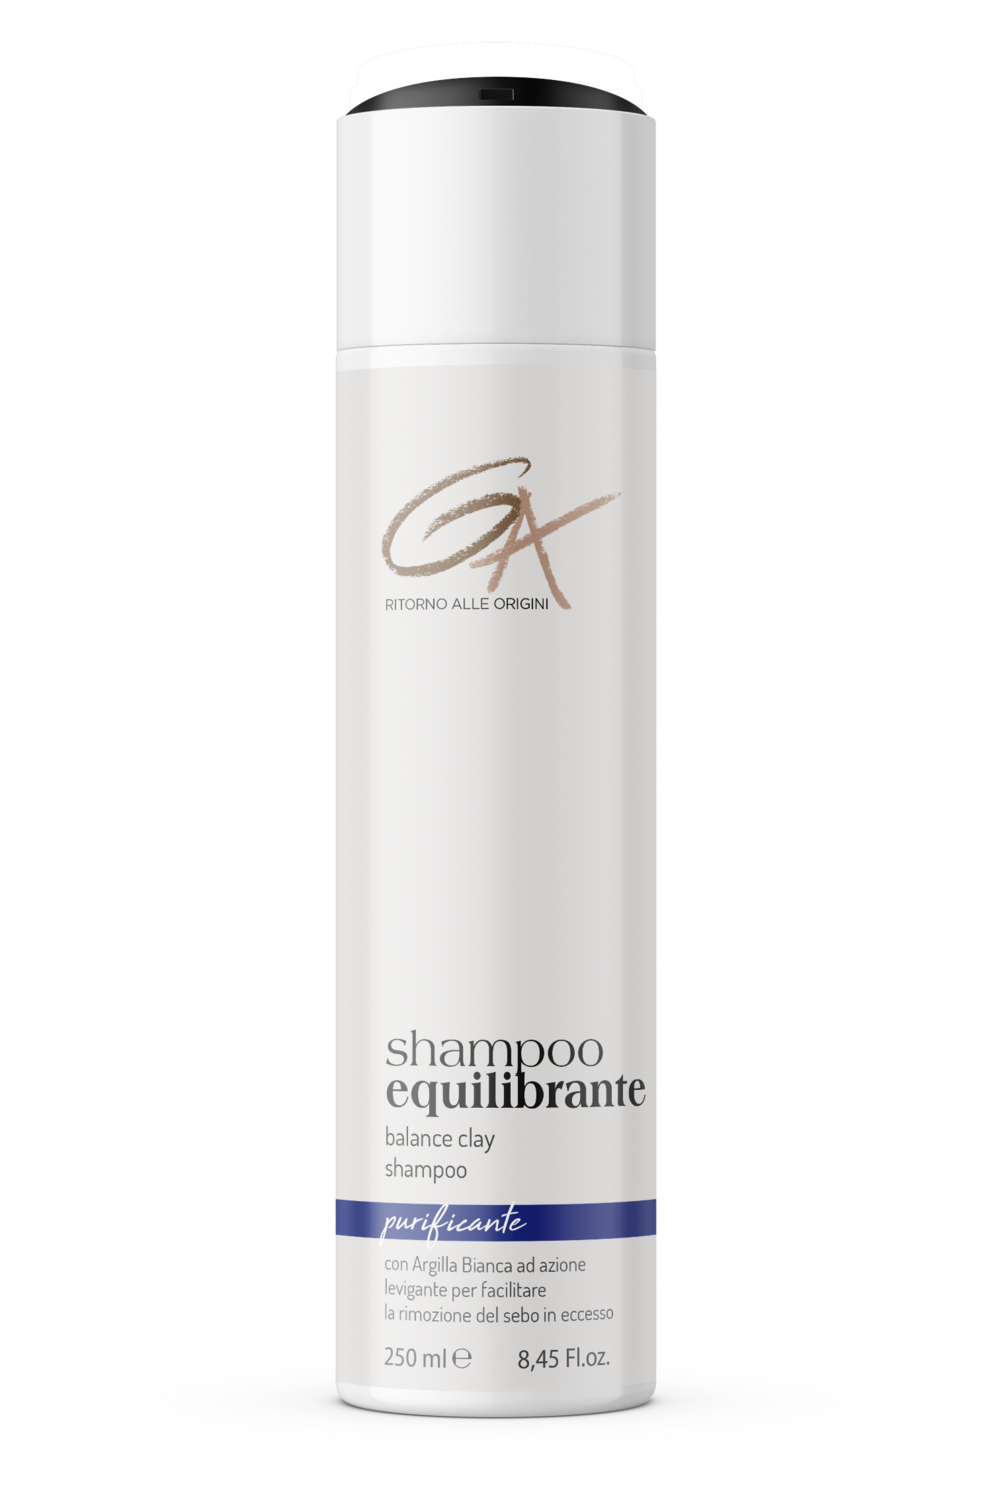 Shampoo Equilibrante Purificante 250ml